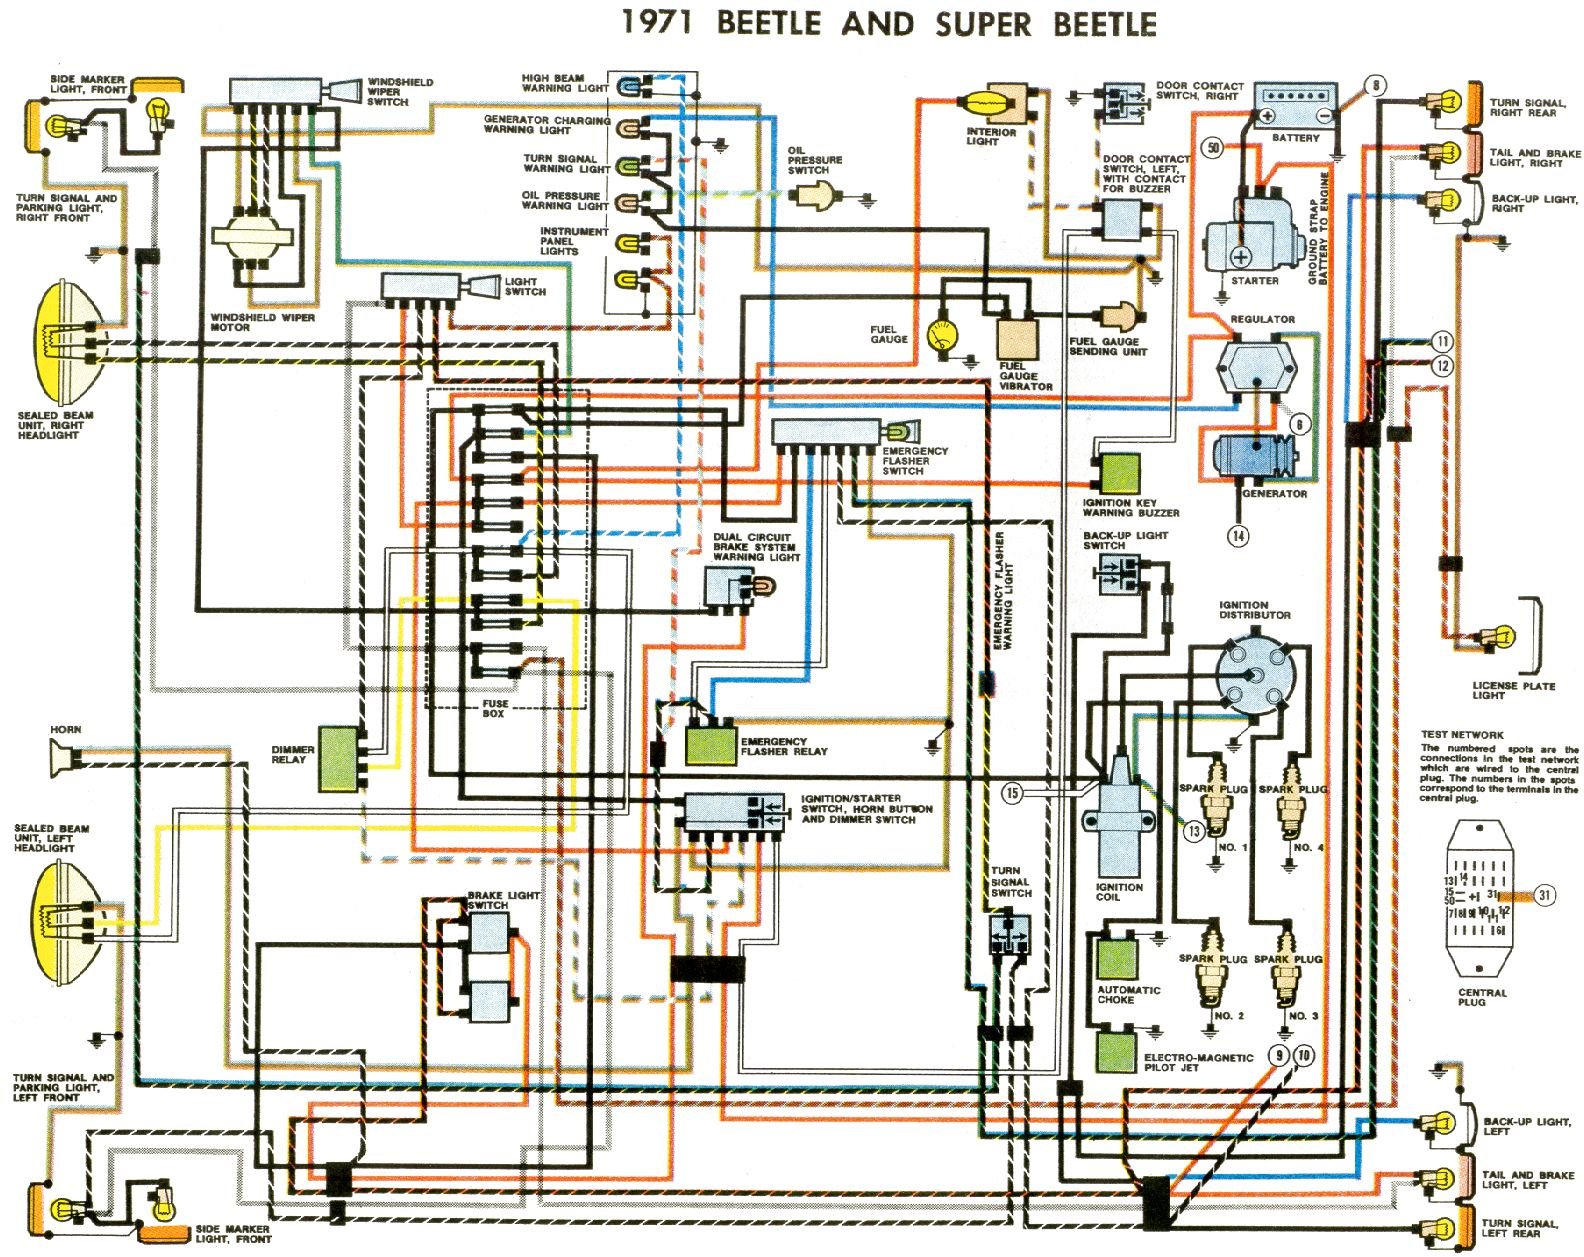 1966 vw 1300 wiring diagram fuse box